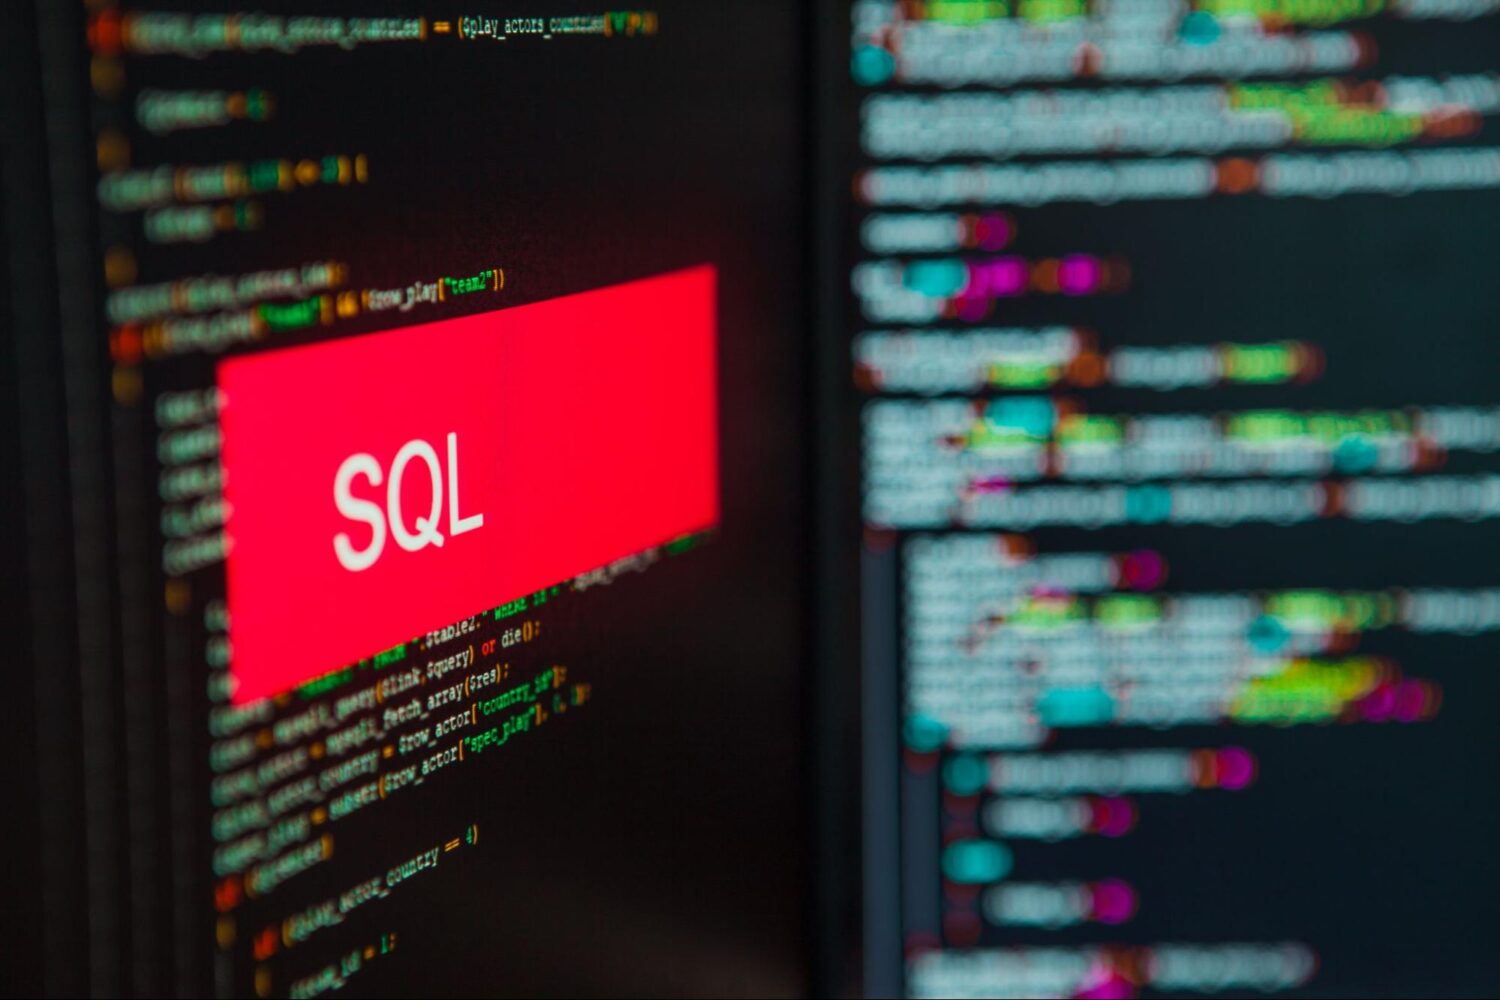 SQL: o que é e o que significa